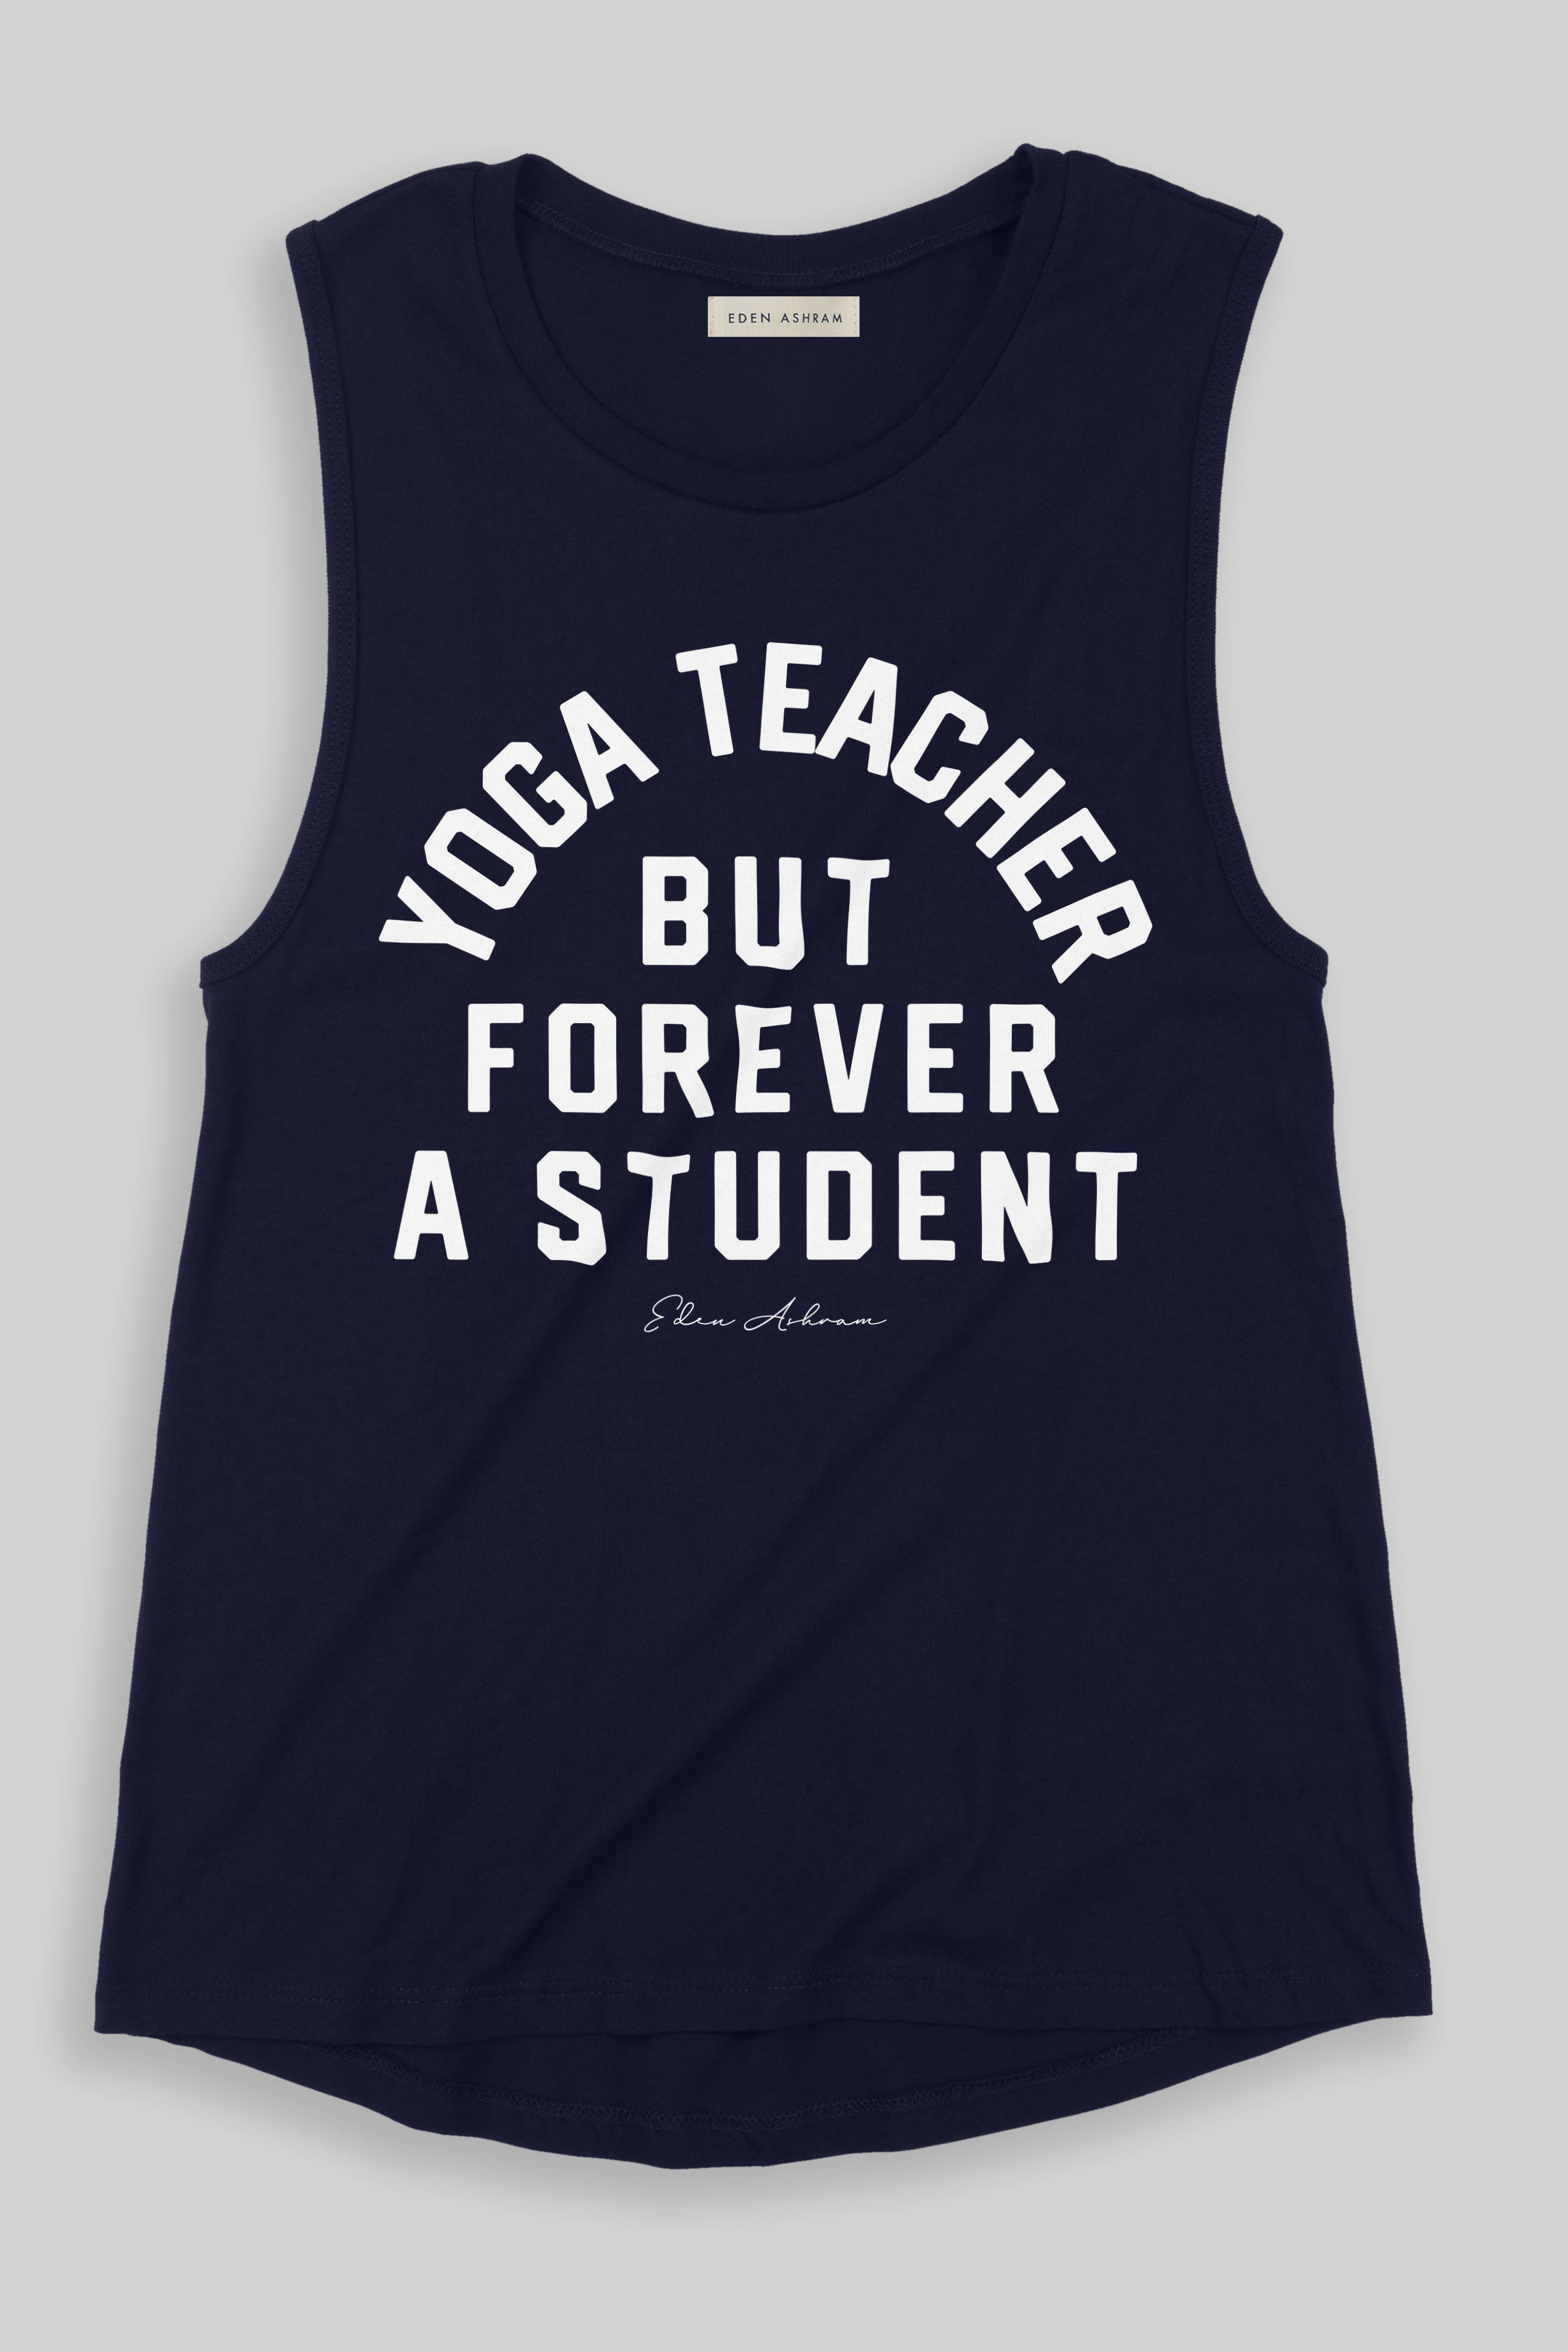 EDEN ASHRAM Yoga Teacher But Forever A Student Premium Jersey Muscle Tank Navy